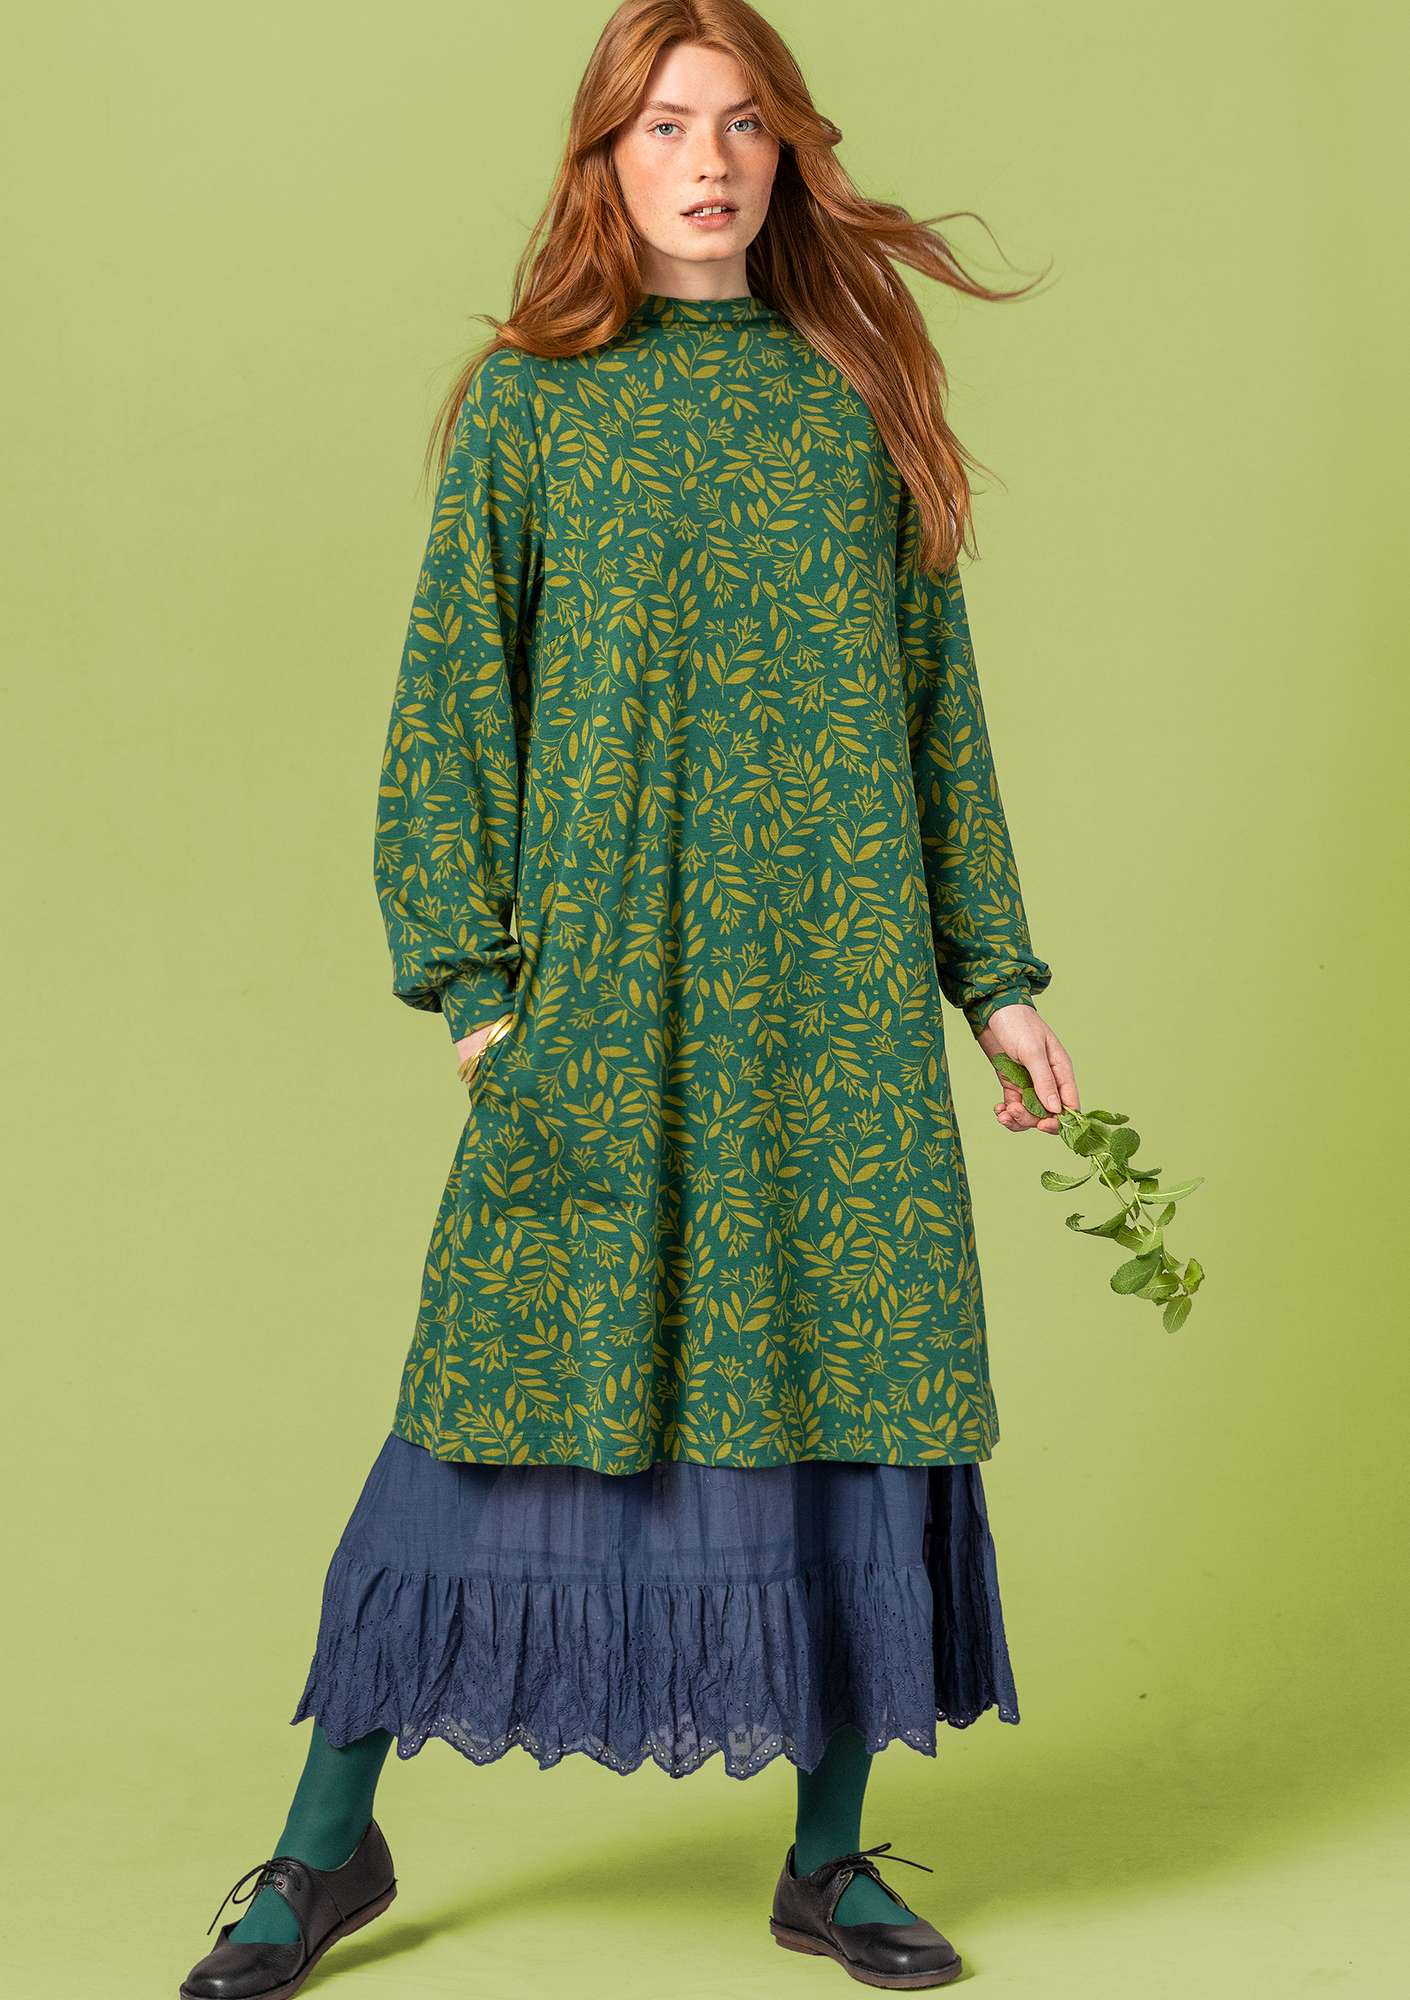 Bladmynta dress asparagus/patterned